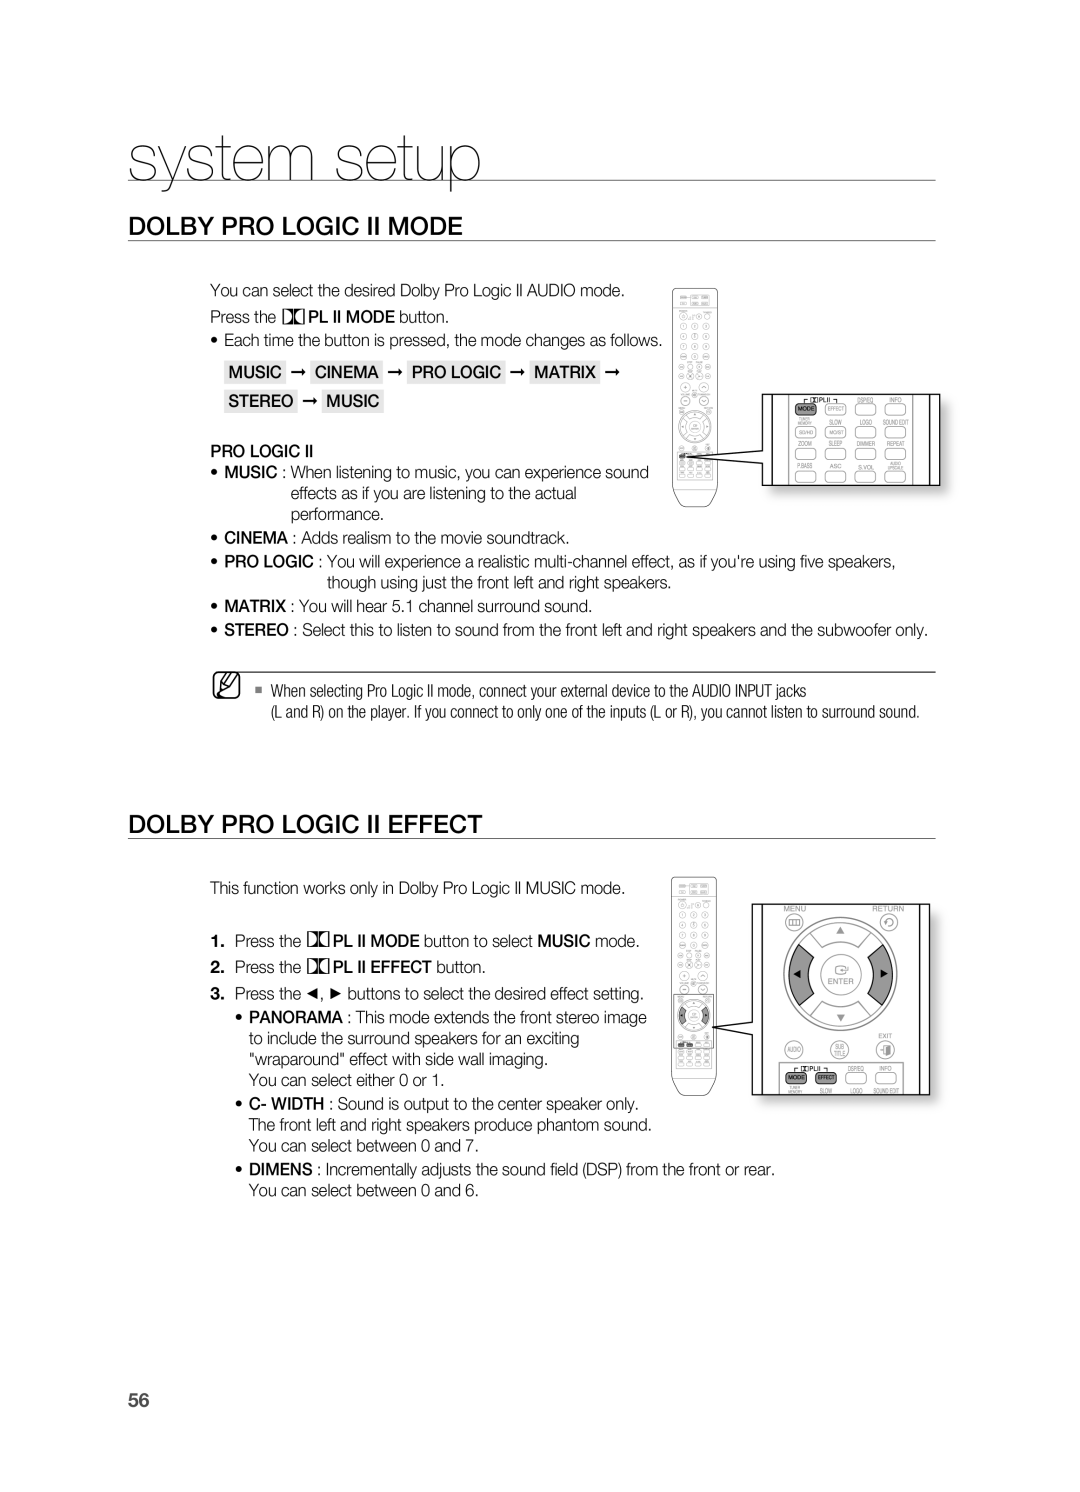 Samsung HT-TX715 user manual DOLBY PrO LOGIC II MODE, DOLBY PrO LOGIC II EFFECT, system setup 